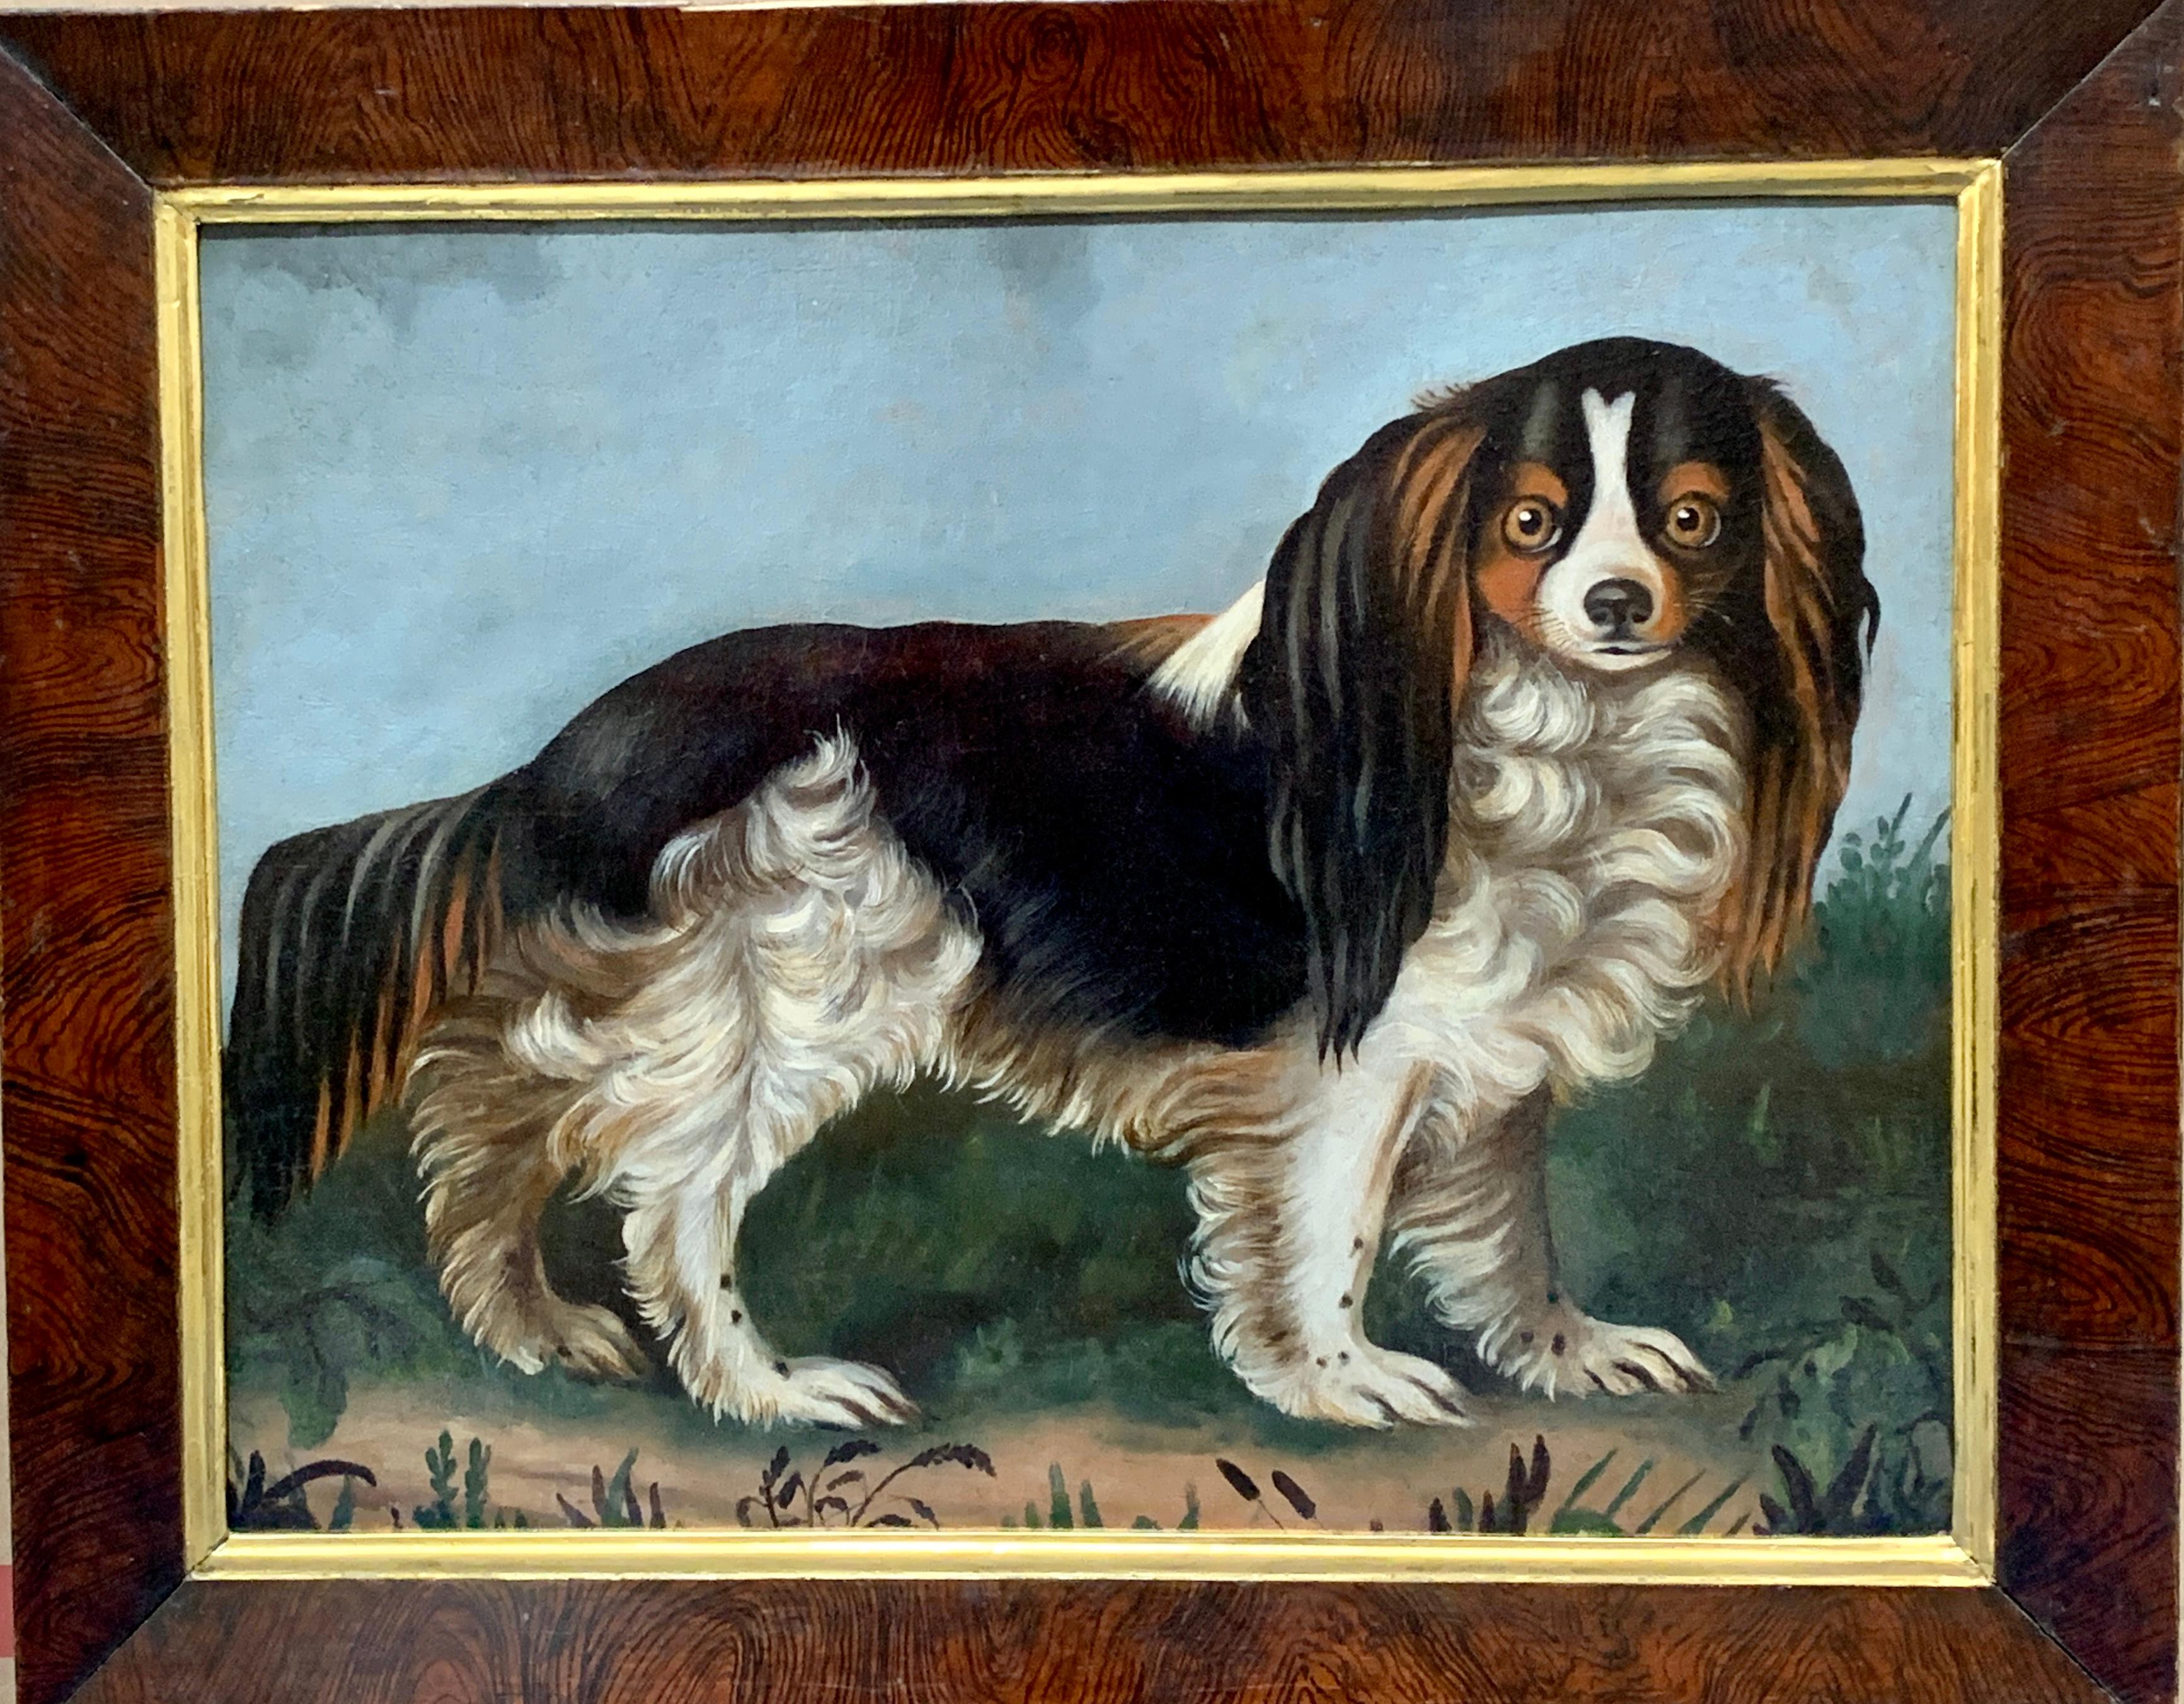 Unknown Portrait Painting - 19th century English folk art portrait of a King Charles Cavalier Spaniel dog 